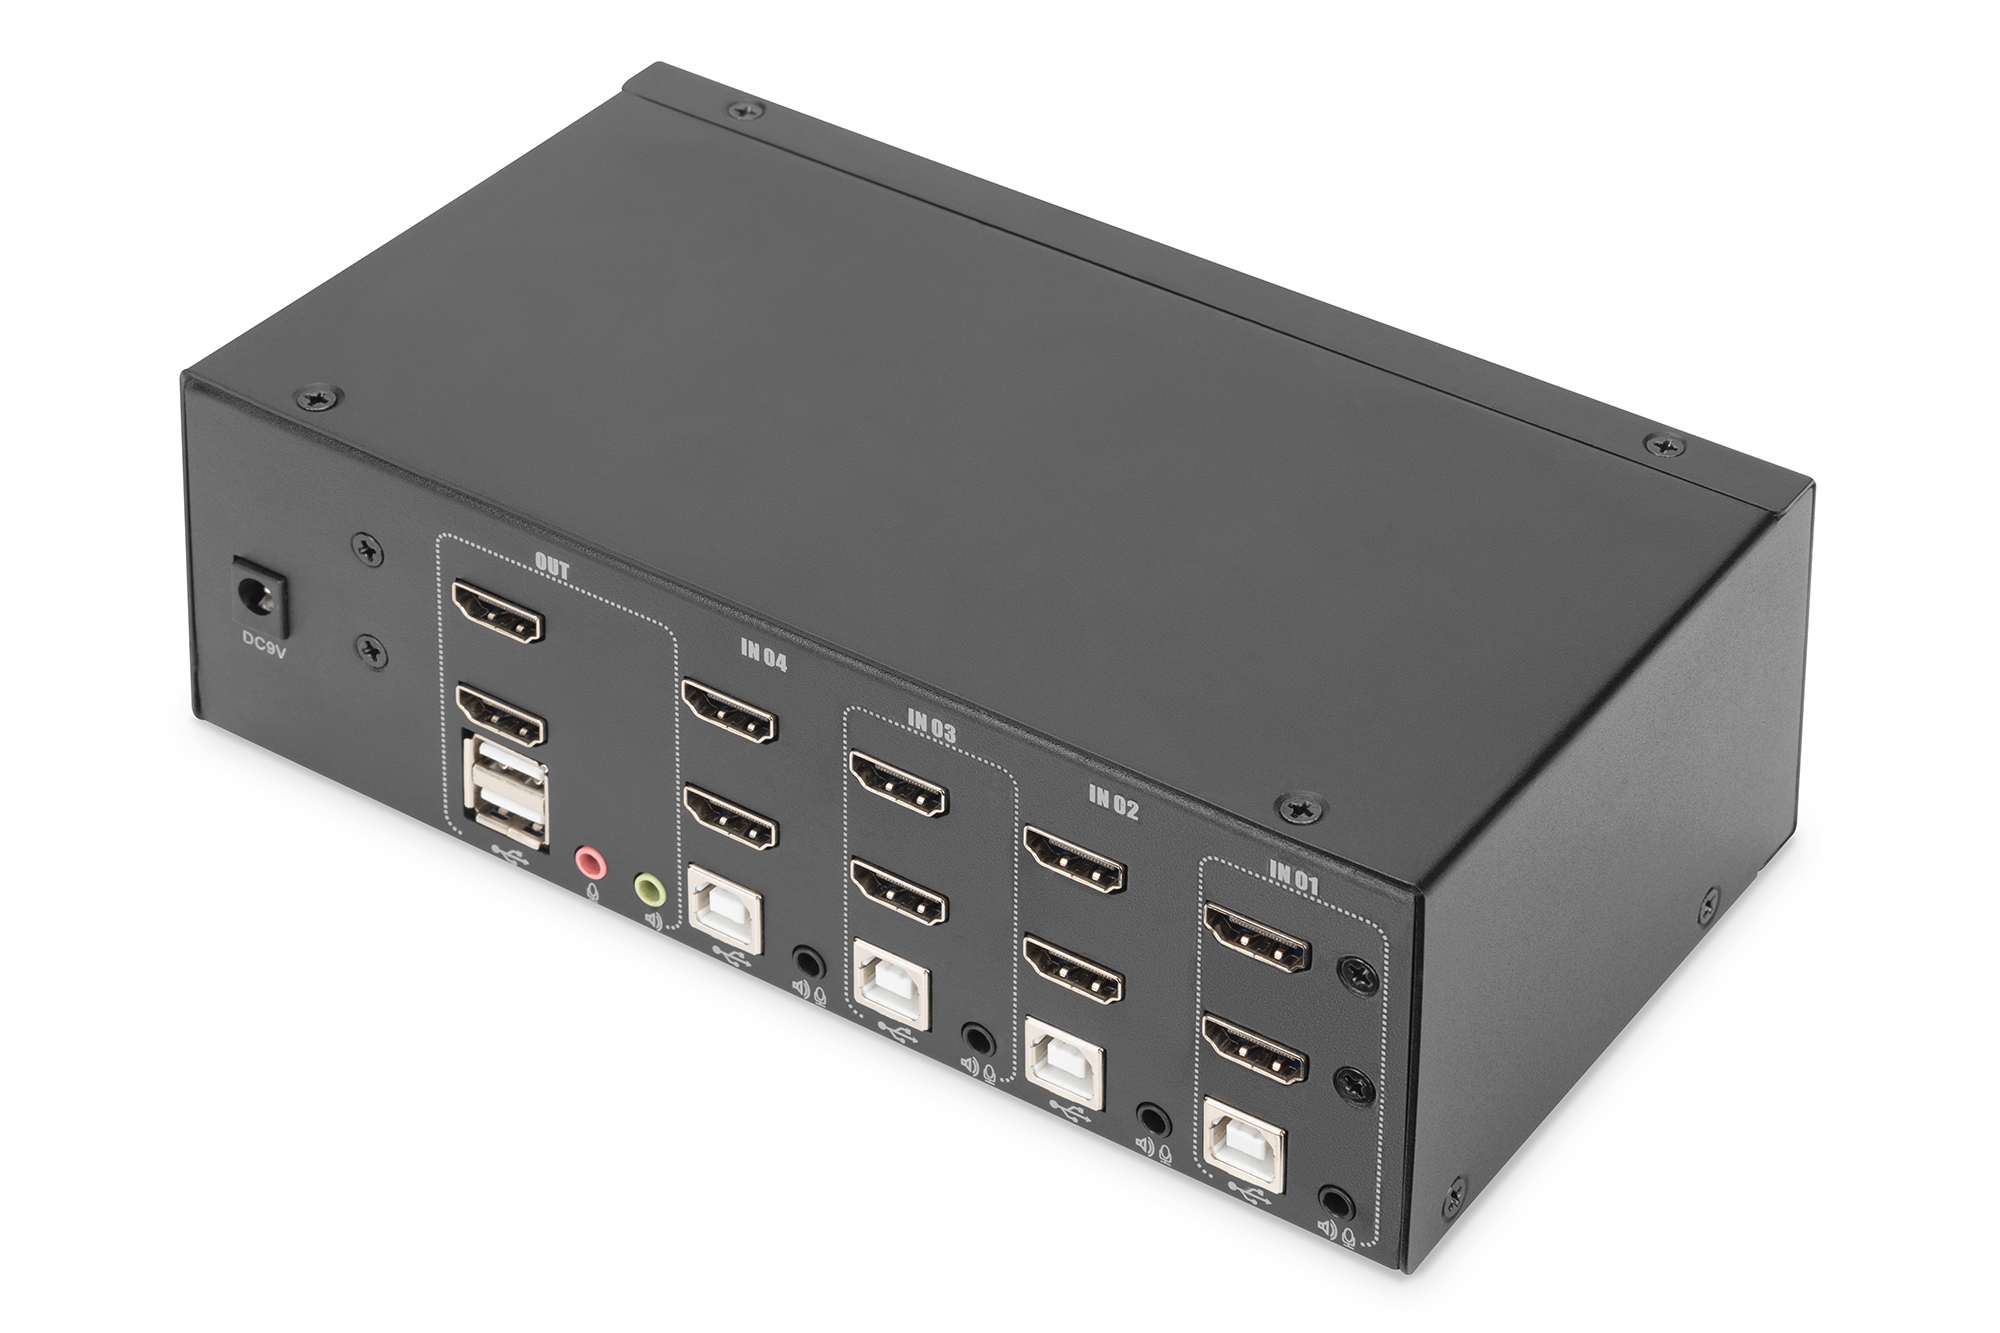 DIGITUS KVM-Switch, 4-Port, Dual-Display, 4K, HDMI